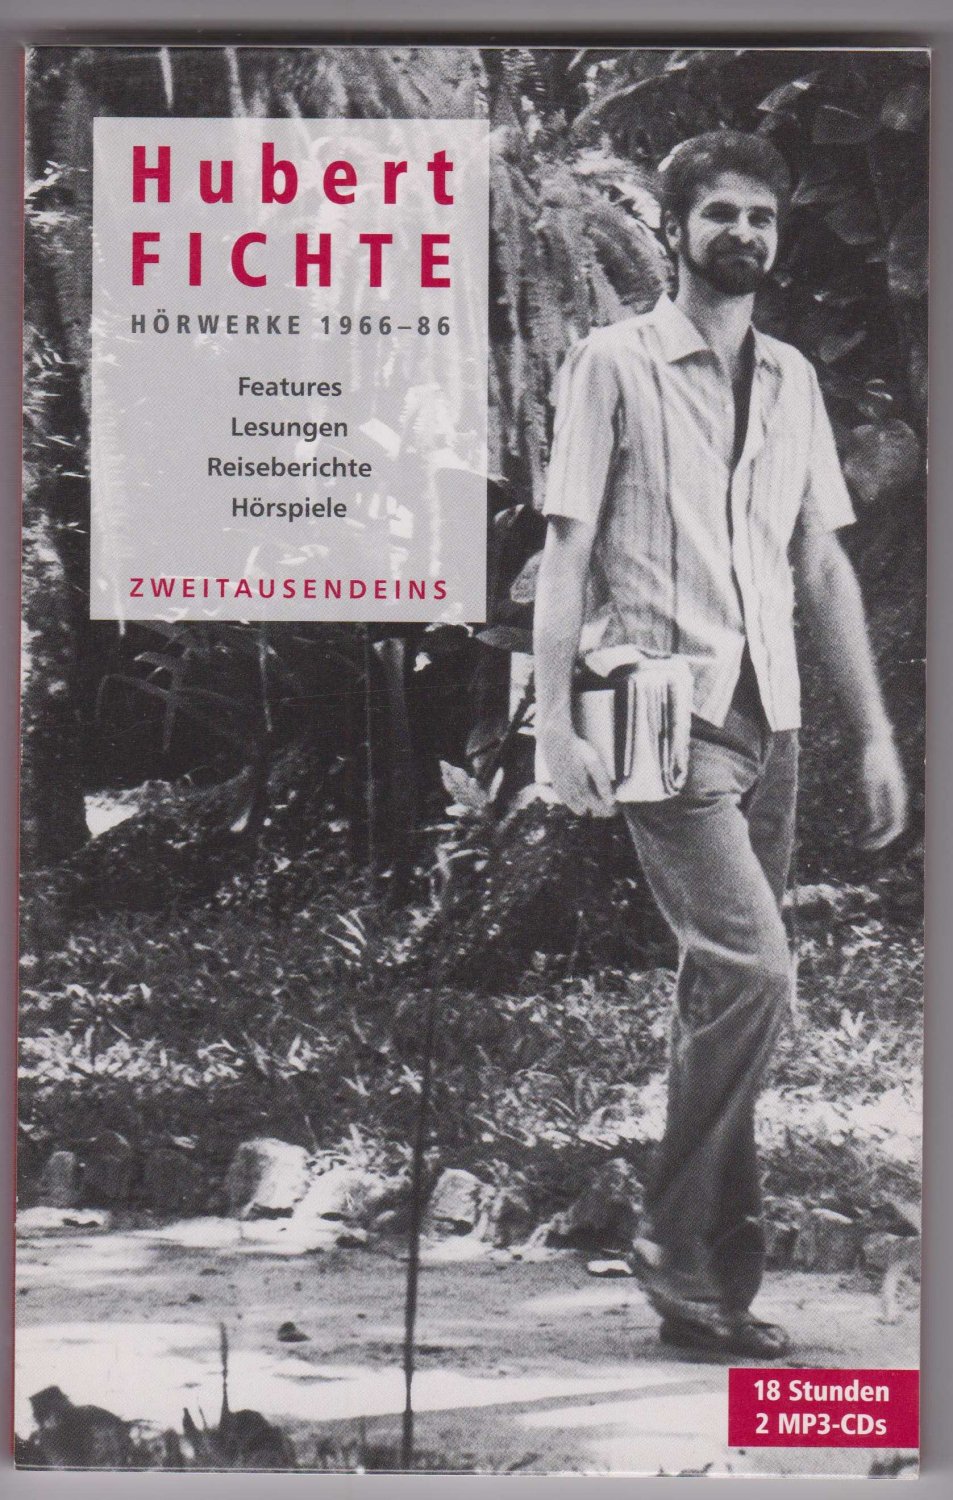 FICHTE, Hubert:  Hubert Fichte. Hörwerke 1966 - 86. Features, Lesungen, Reiseberichte, Hörspiele. 